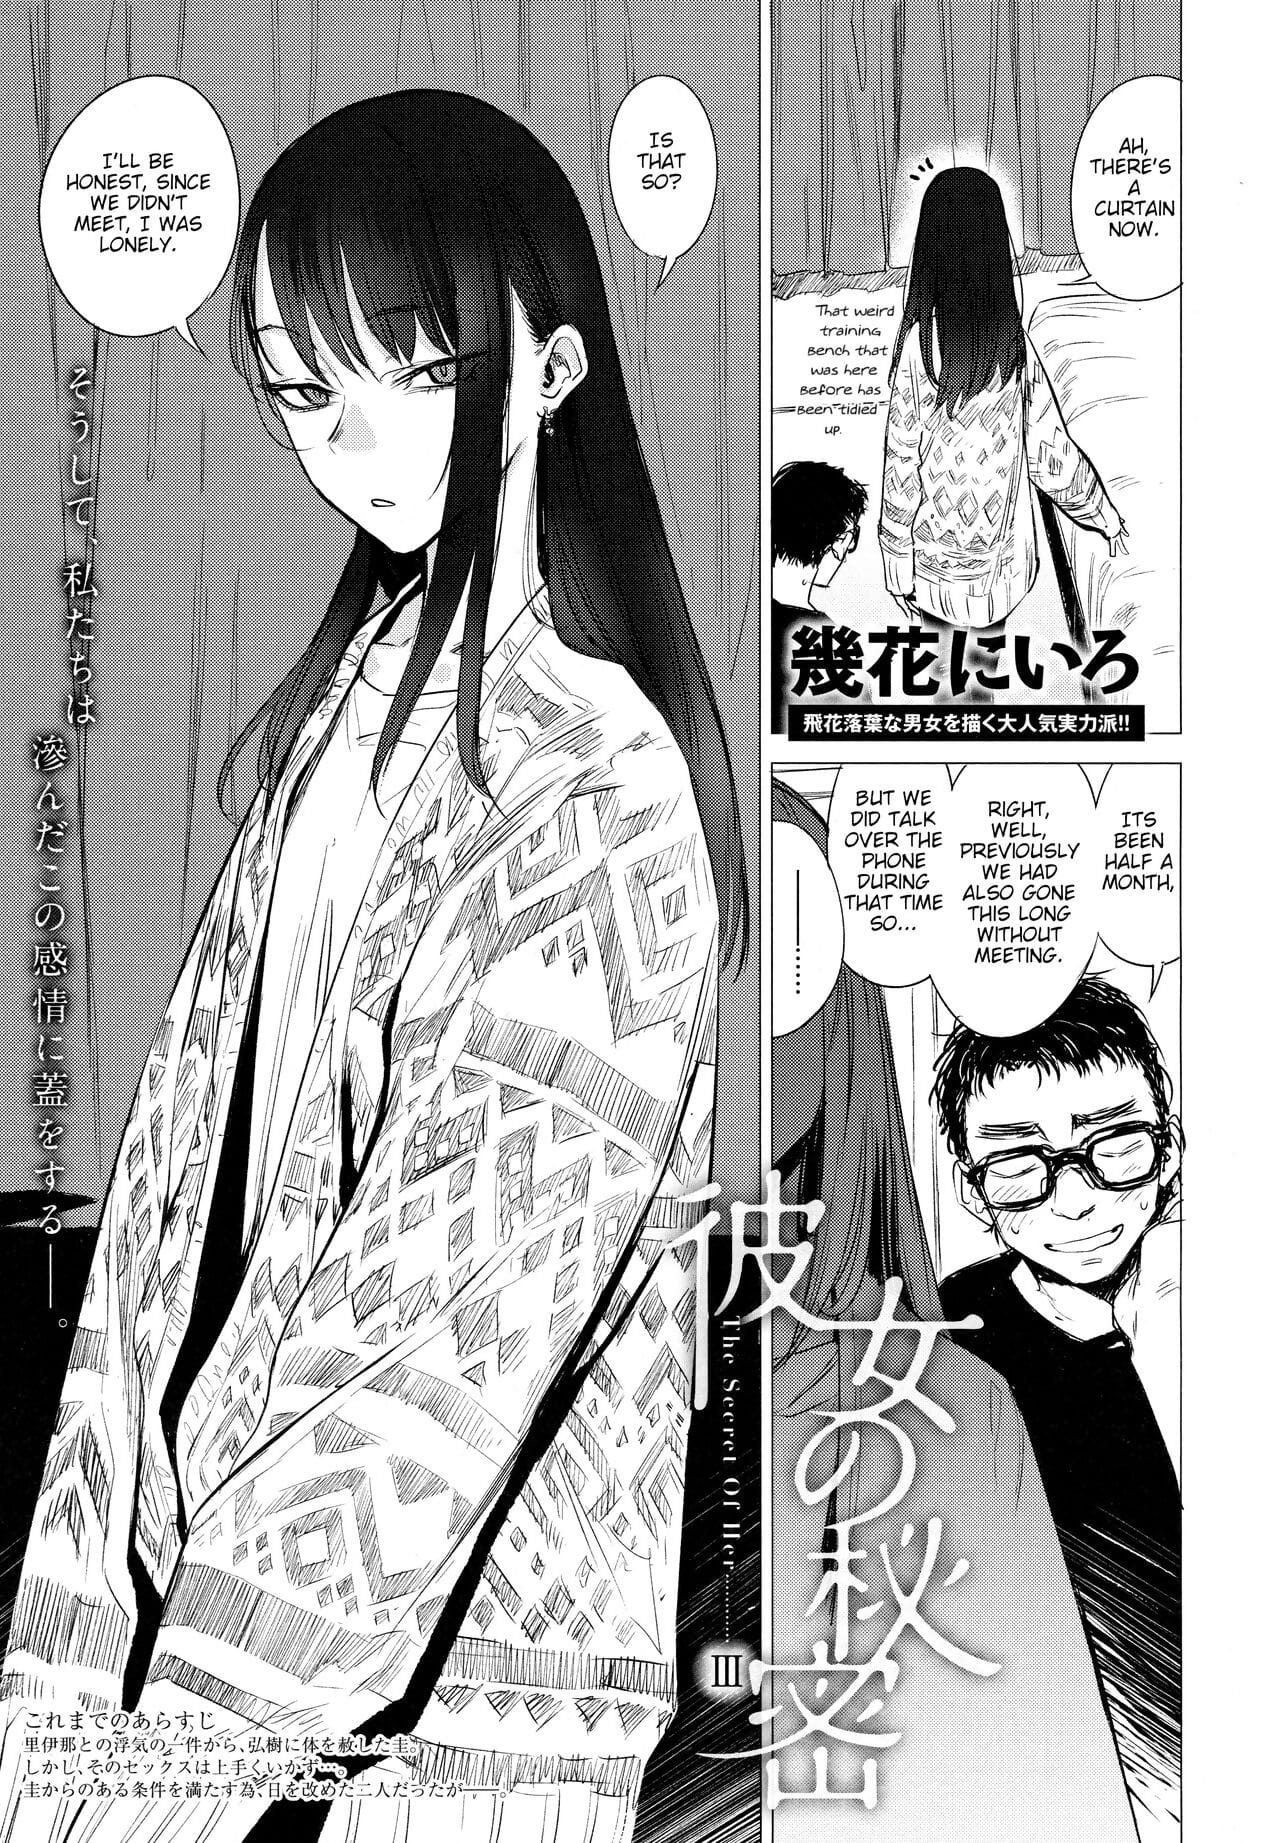 Kanojo no Himitsu III - The Secret of Her III page 1